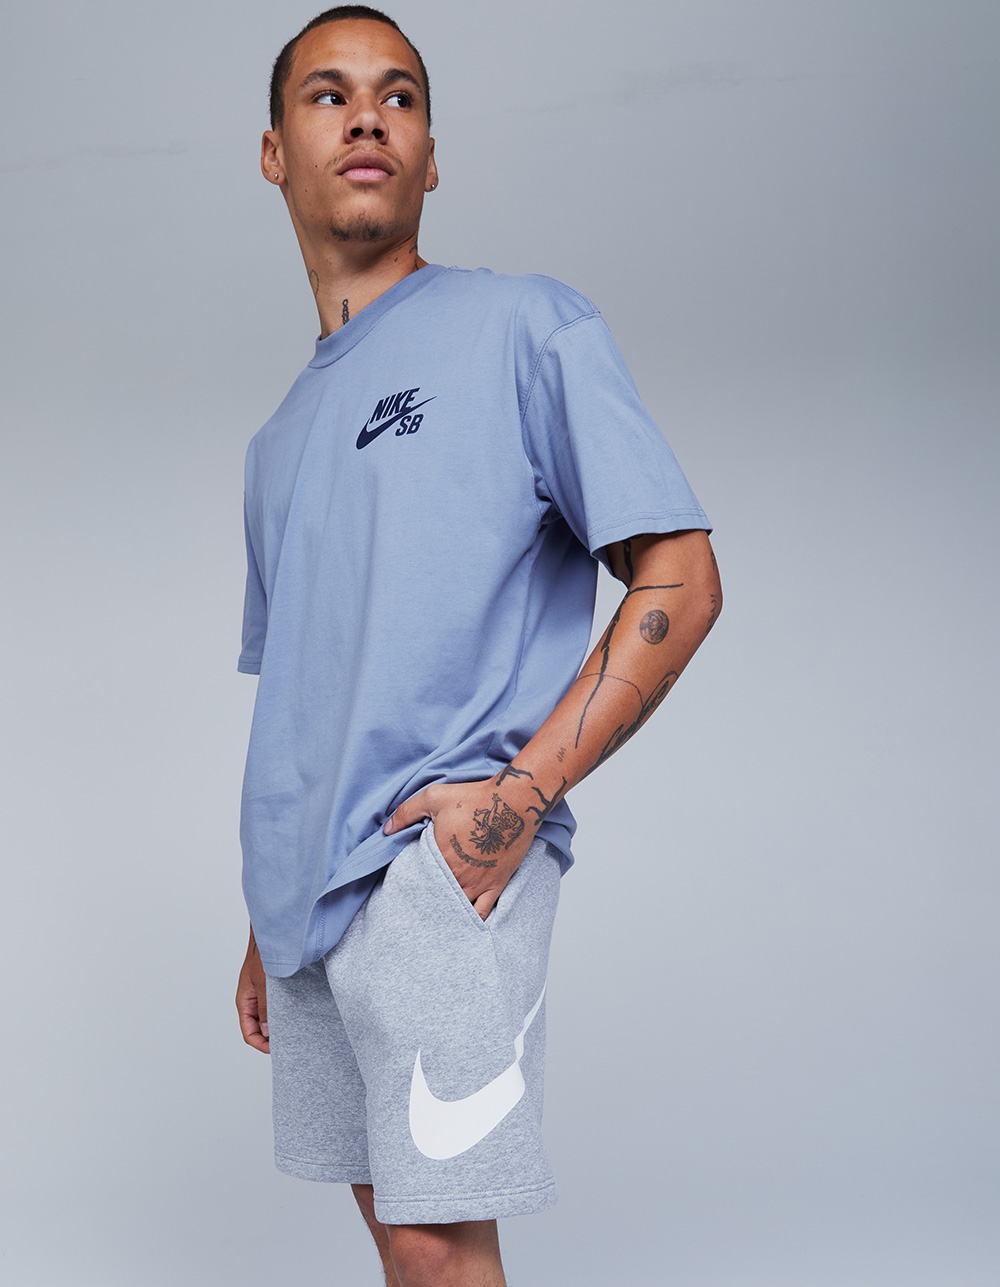 Men's Nike Shorts: Nike Sweat Shorts & Athletic Shorts for Men